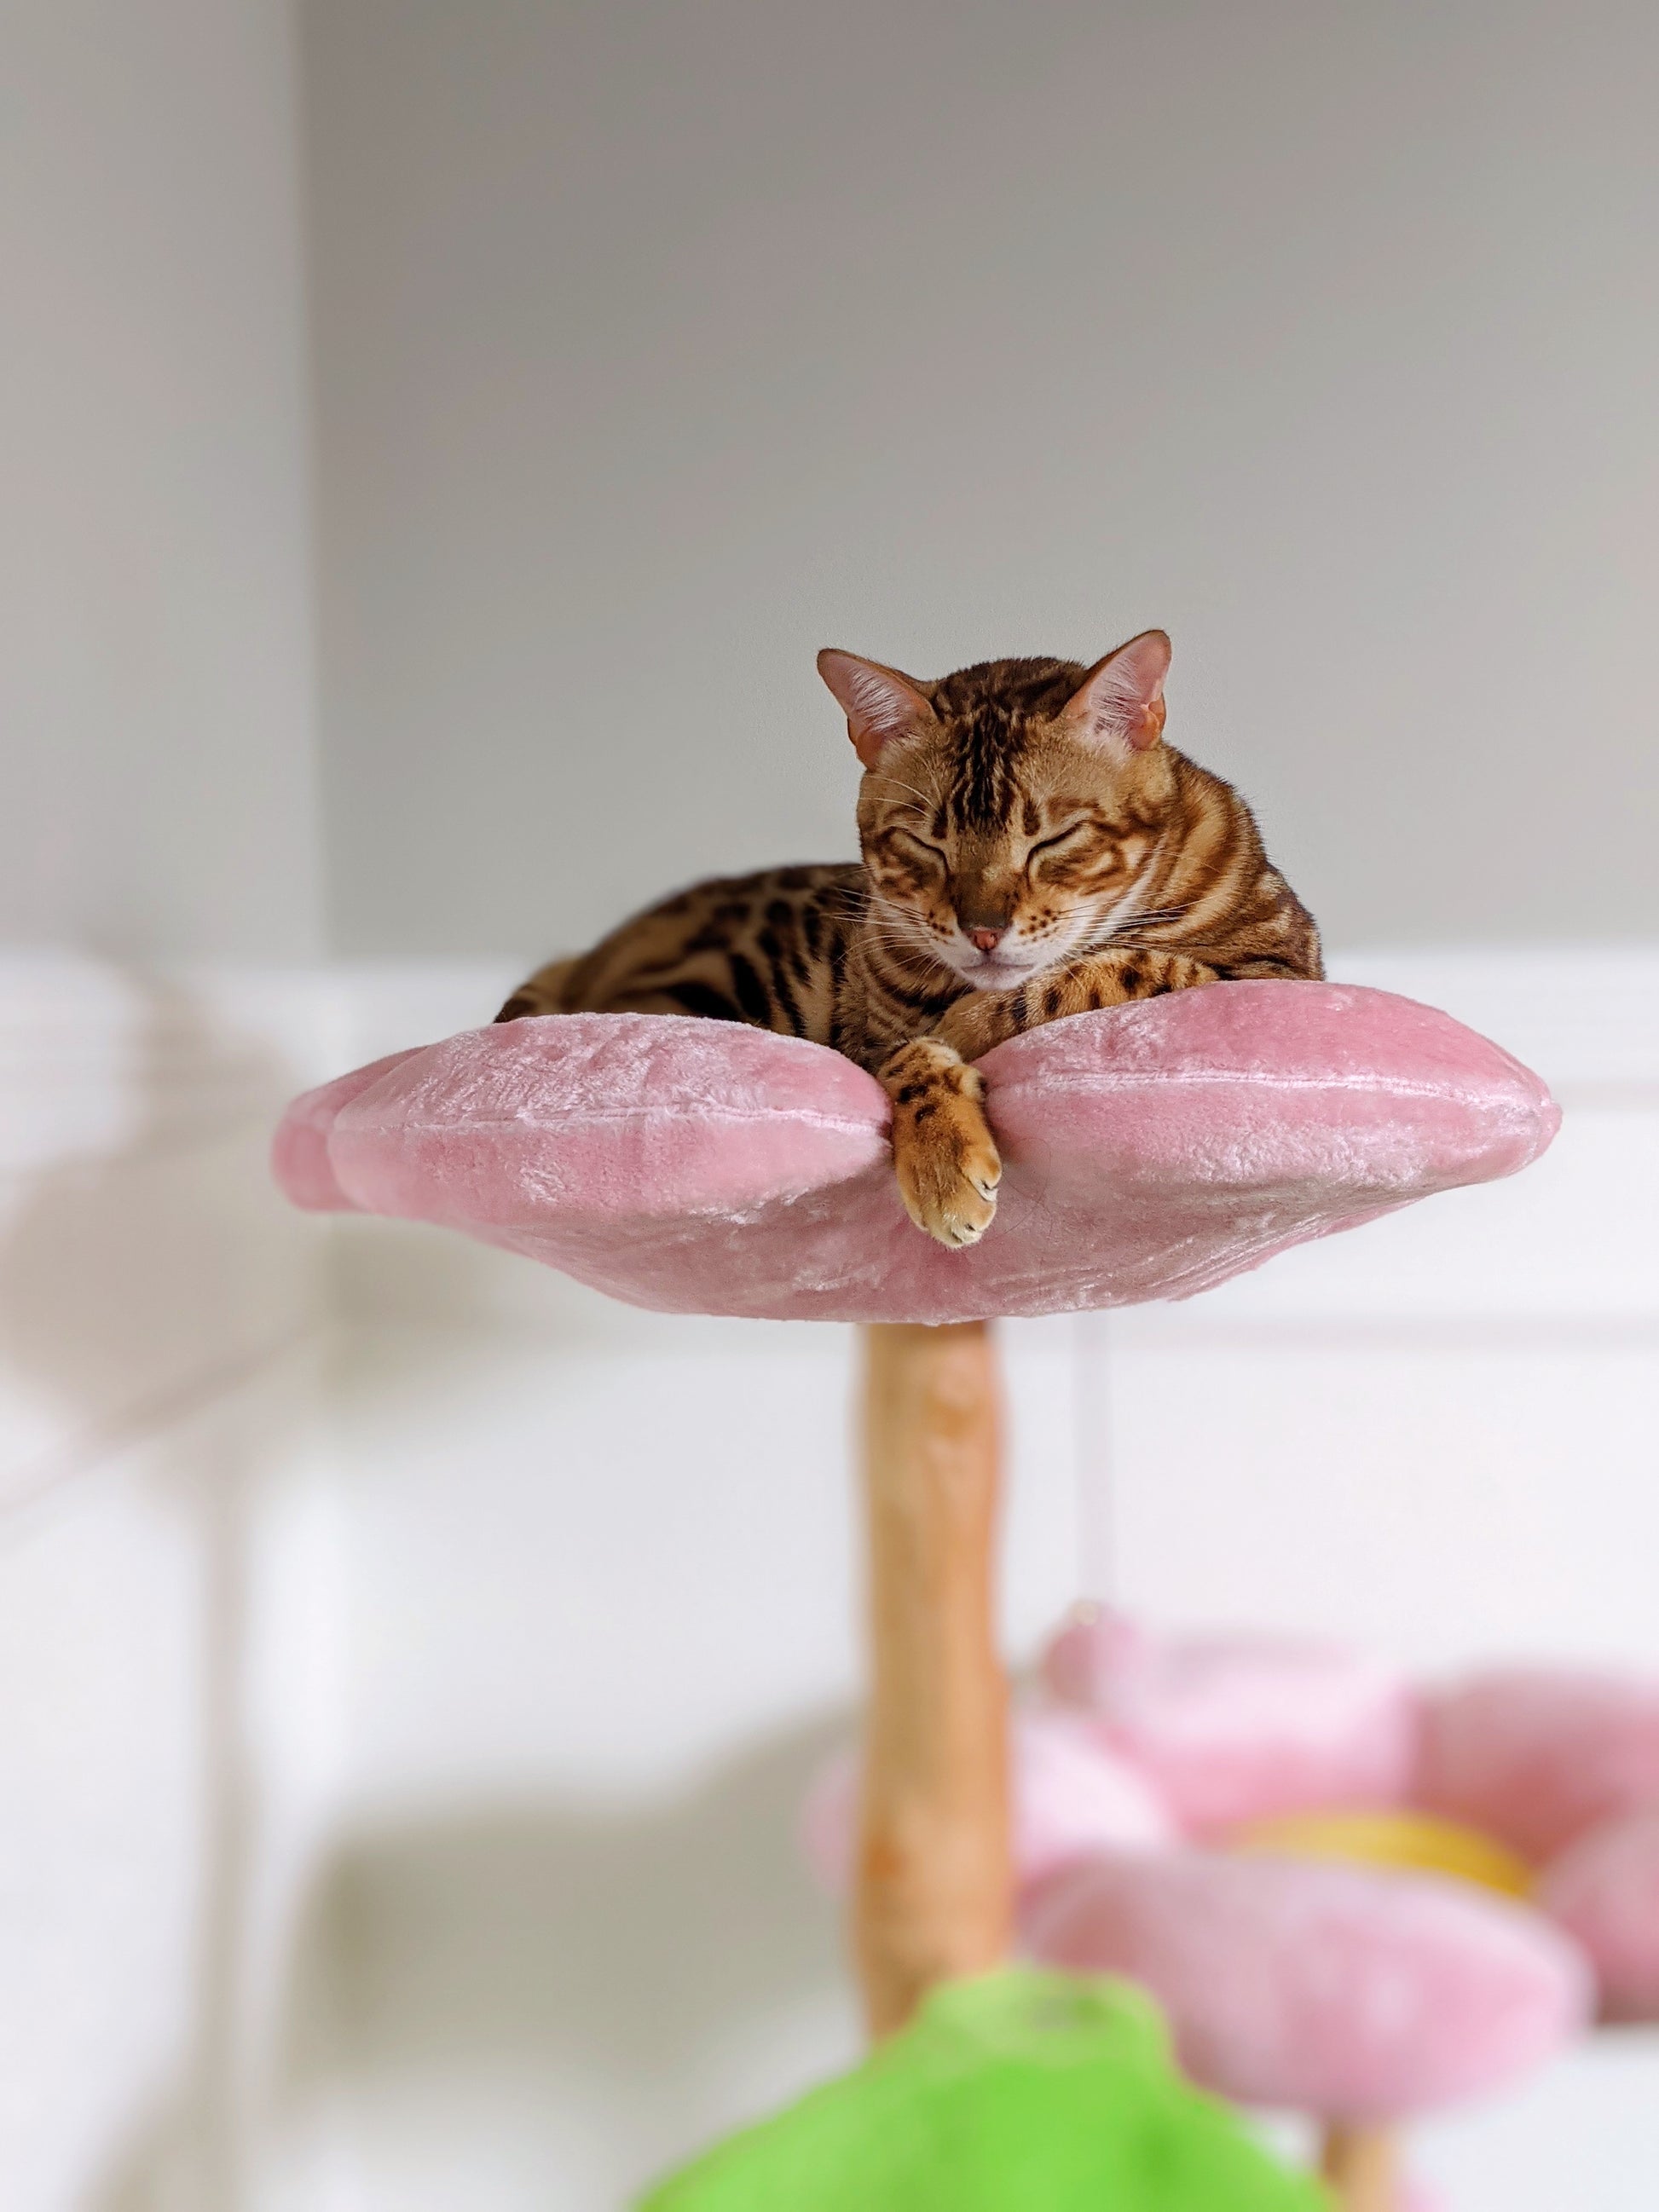 Joyful cat on the pink flower cat tree, enhancing visual appeal of floral feline furniture